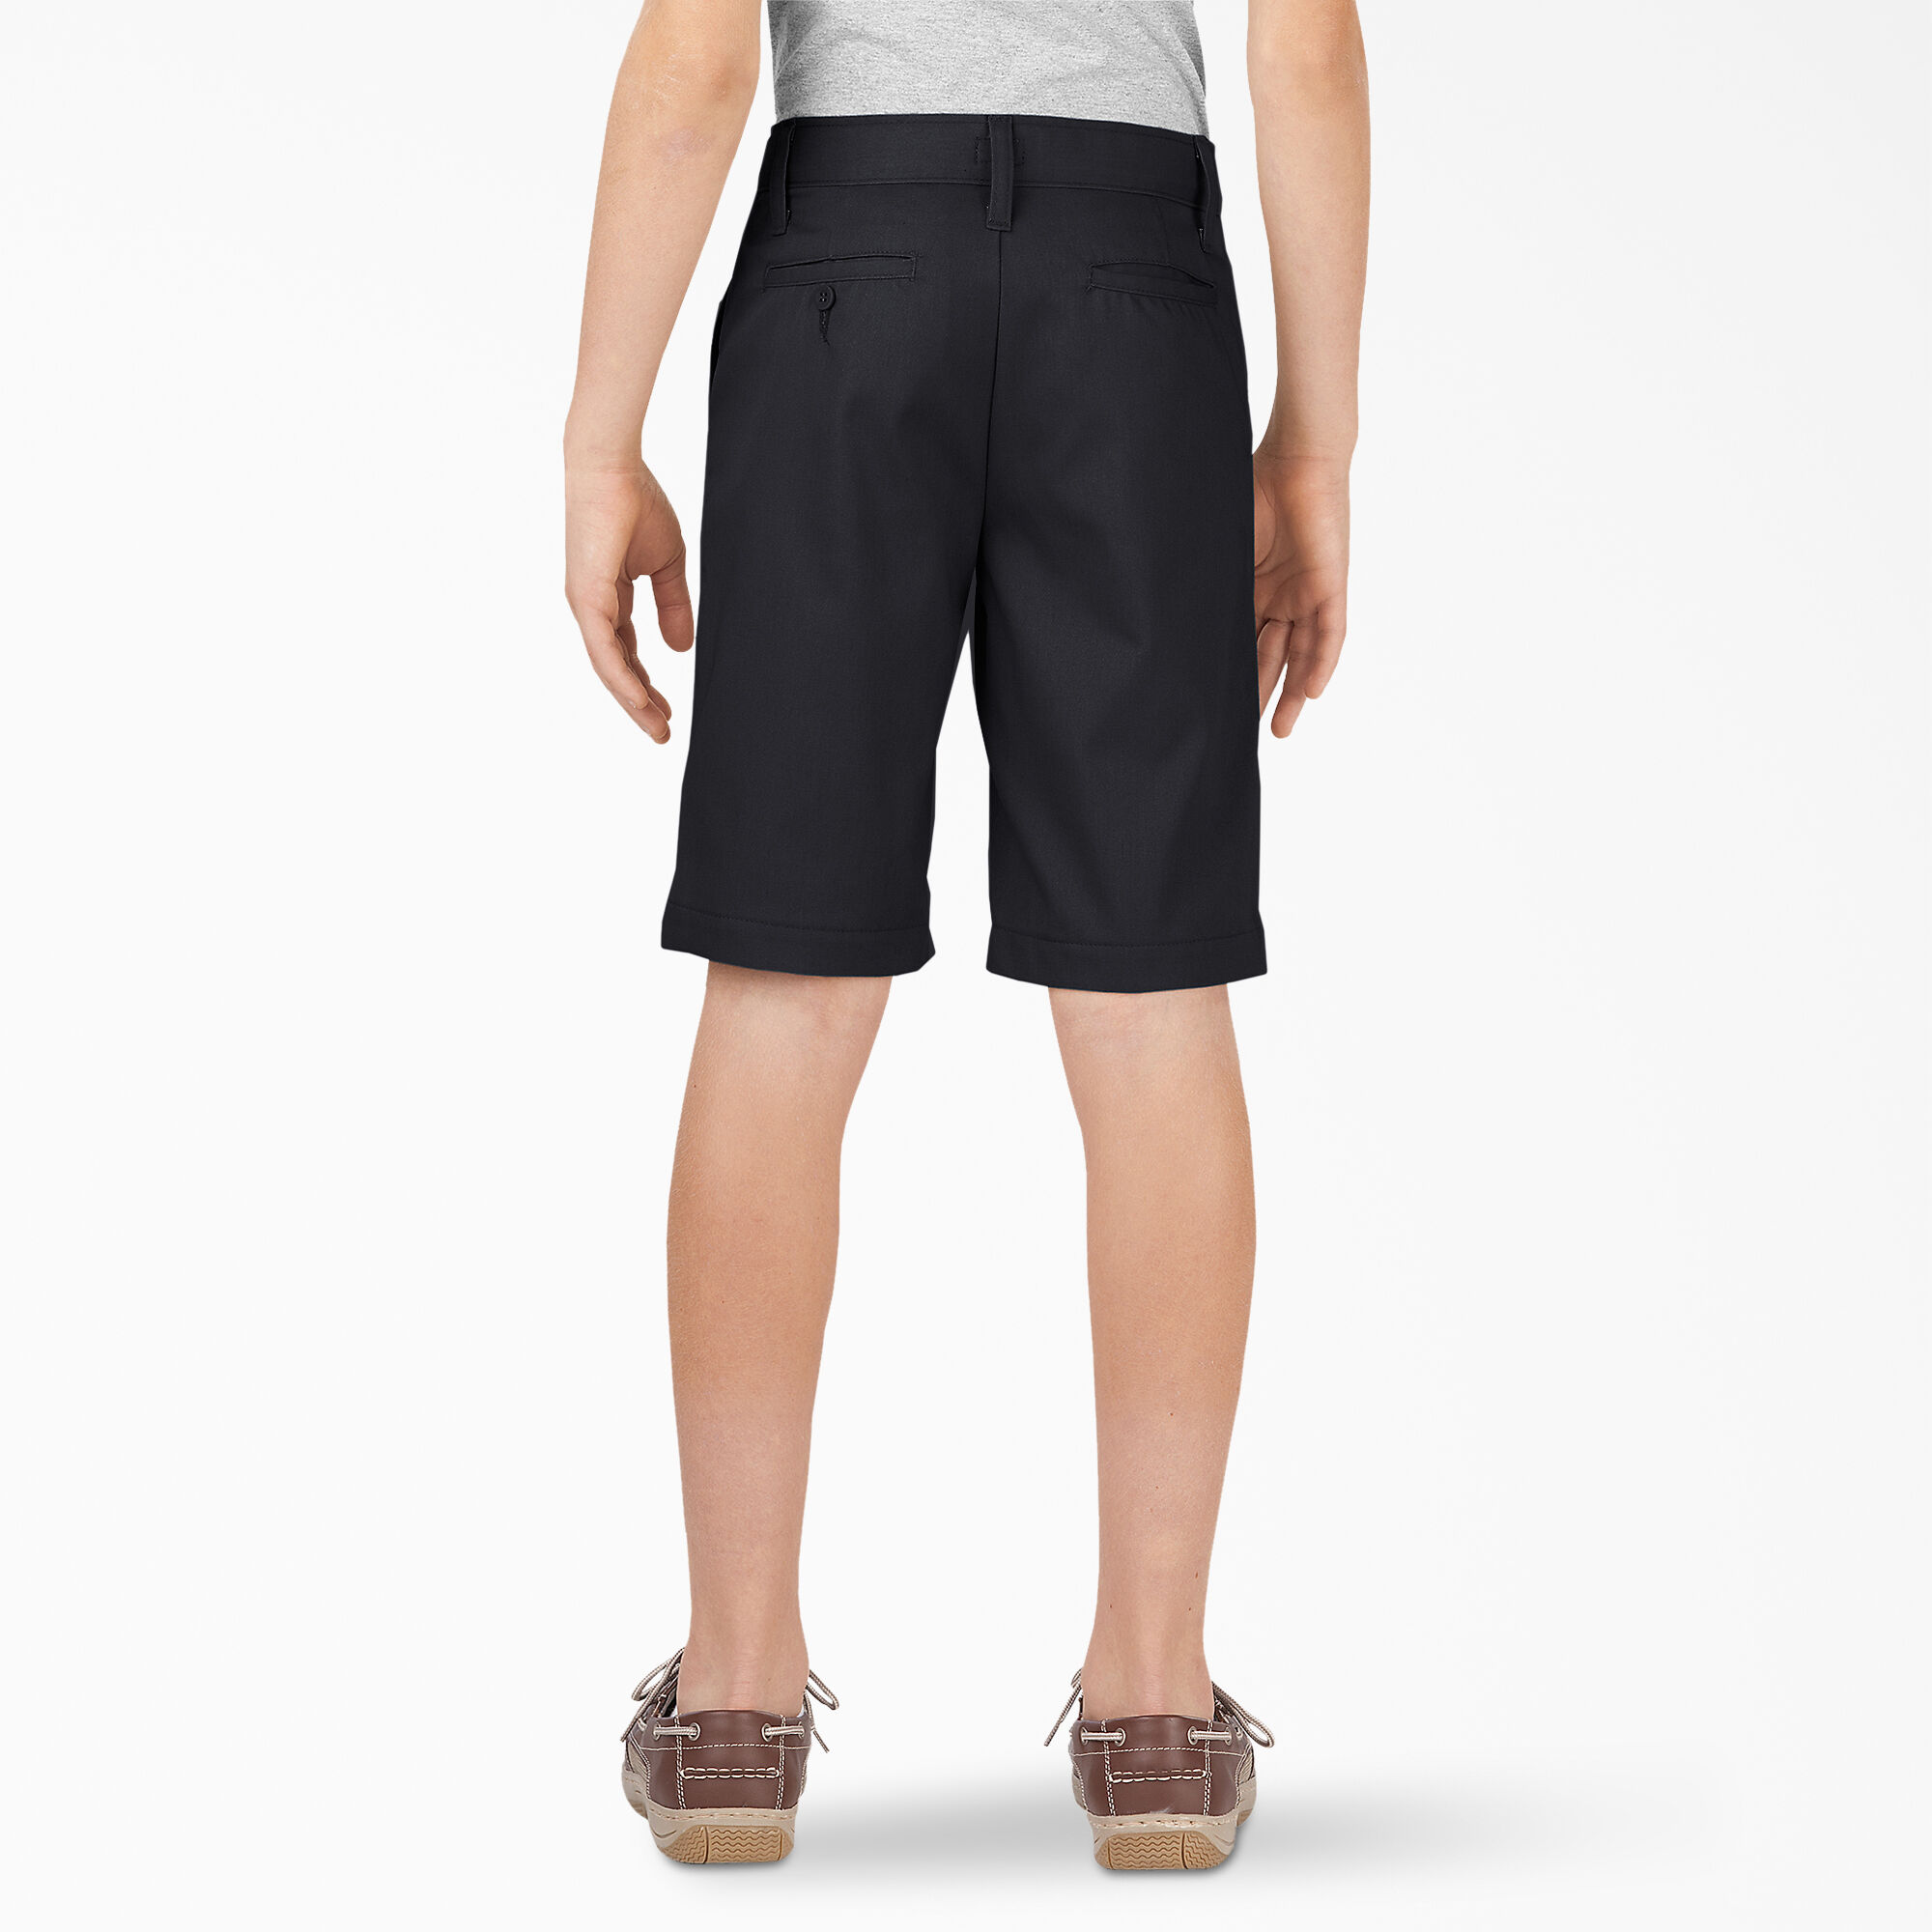 Boy Dockers Approved Schoolwear Navy Shorts Flat Front Adjustable Waist Reg/Husk 